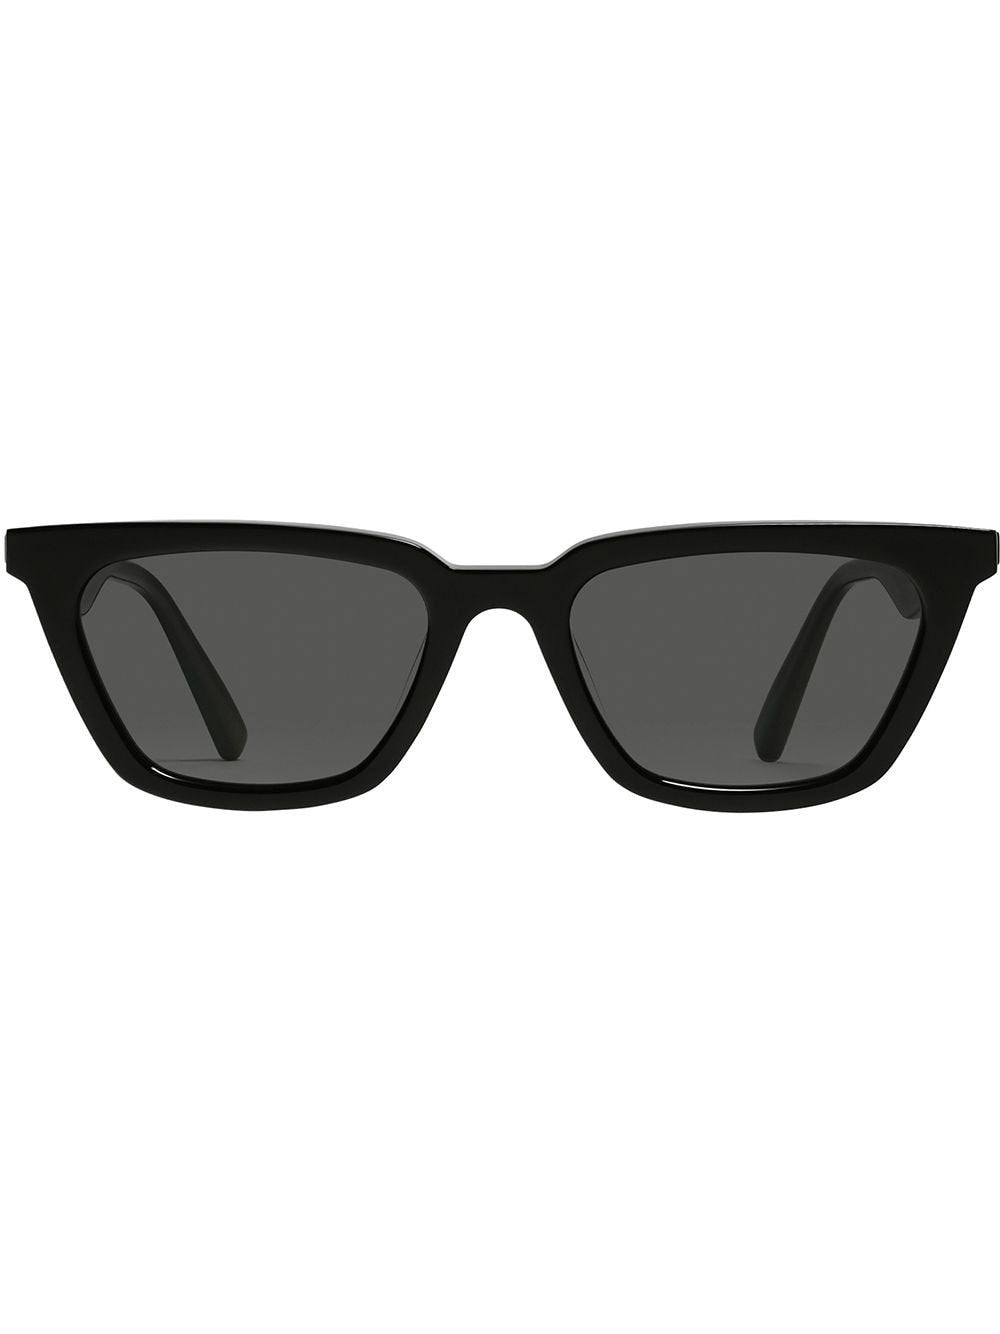 GENTLE MONSTER AGAIL01 Acetate Sunglasses - André Opticas